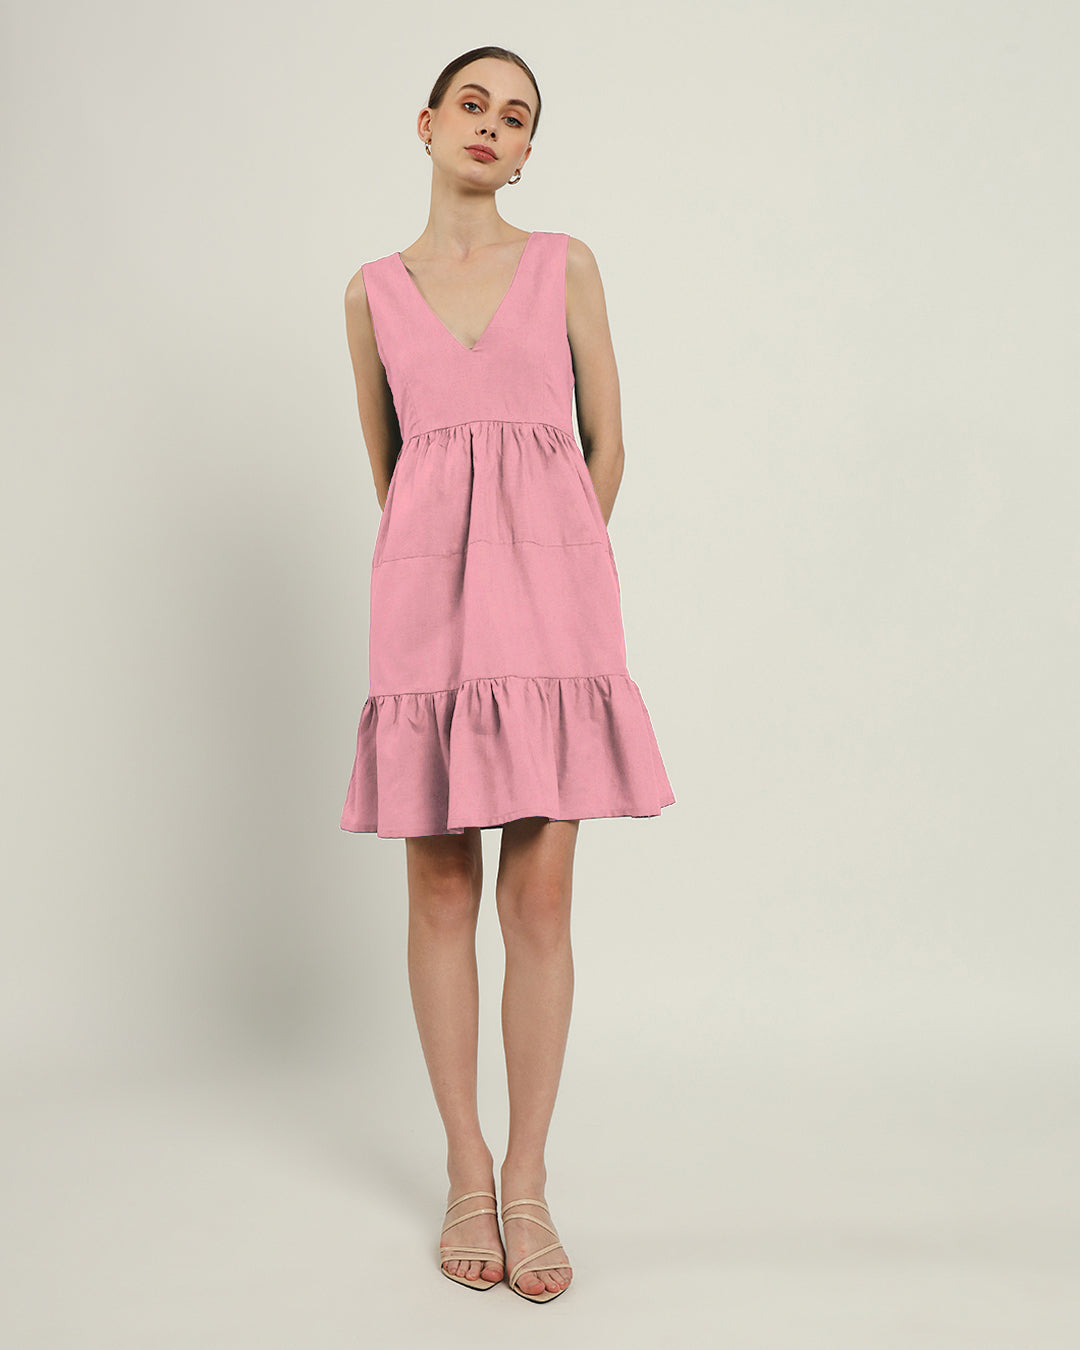 The Minsk Fondant Pink Cotton Dress